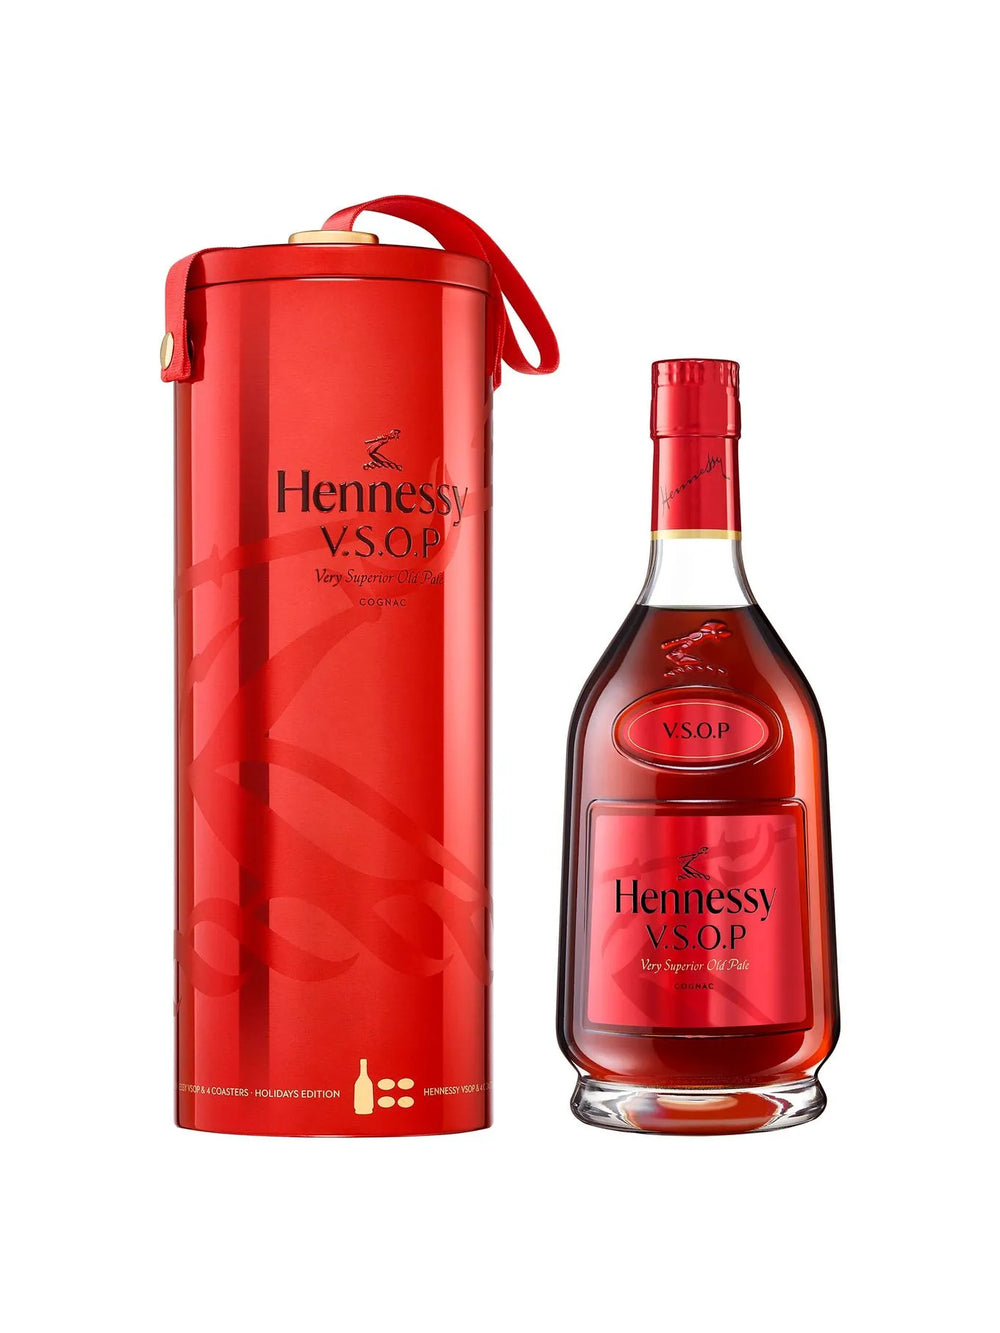 Cognac Hennessy Vsop Est Metalico Rojo - 700 Ml